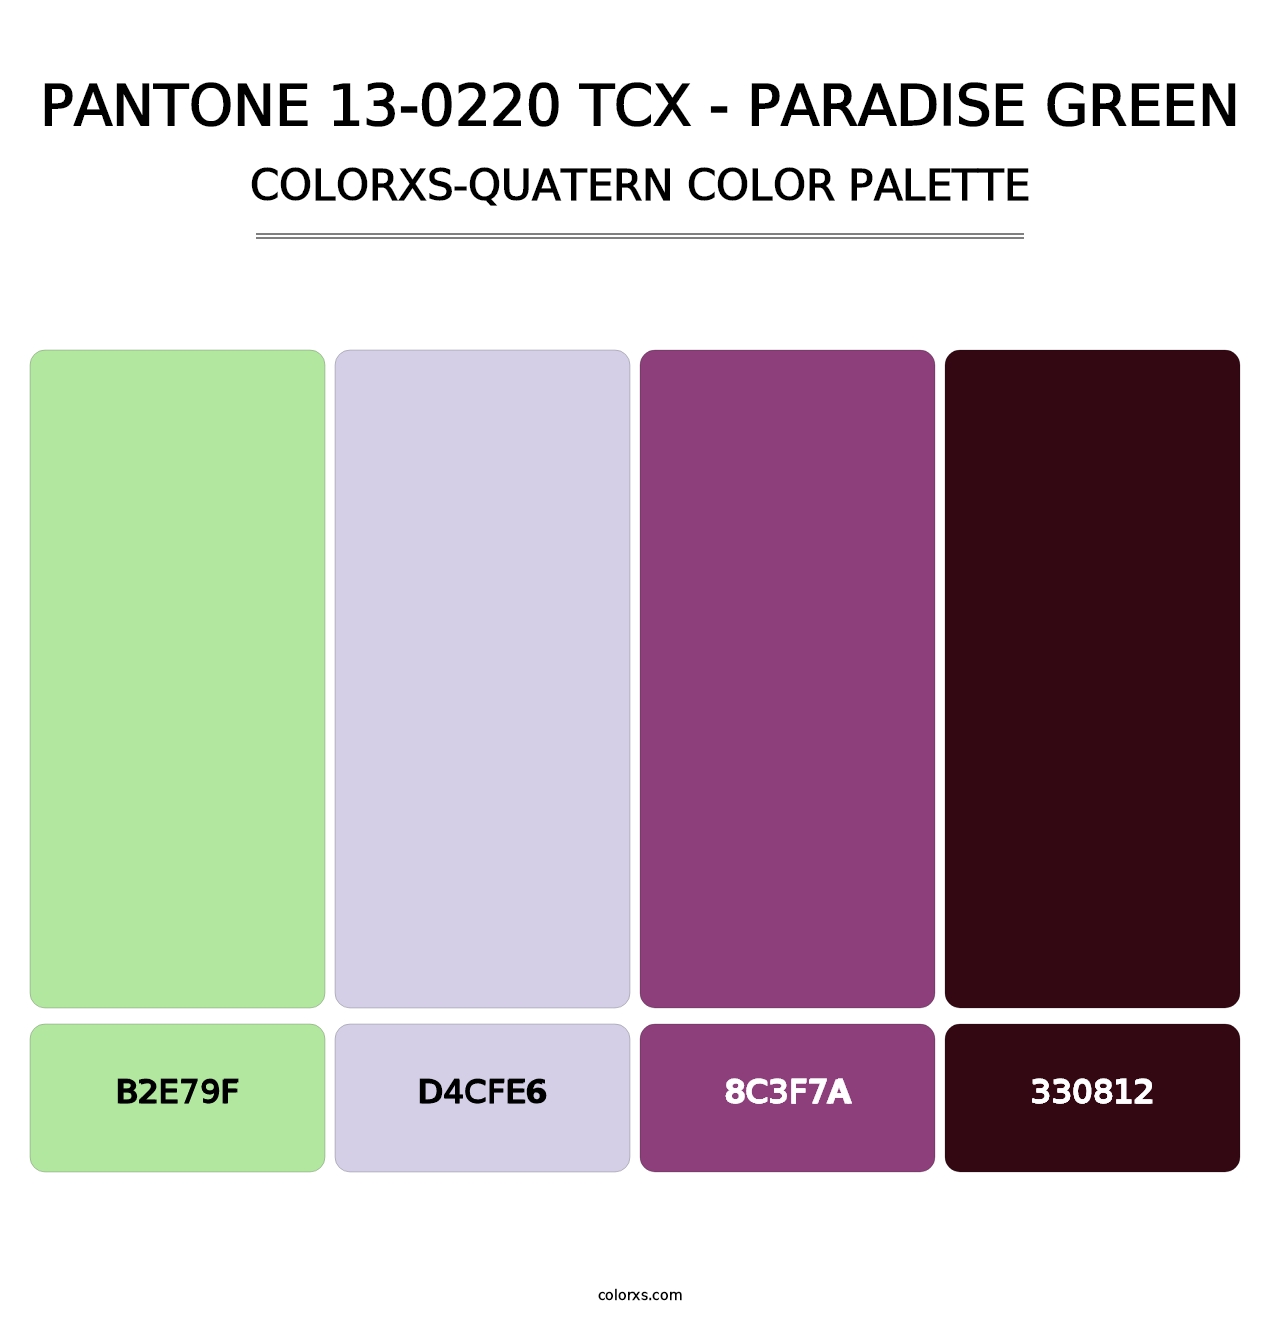 PANTONE 13-0220 TCX - Paradise Green - Colorxs Quatern Palette